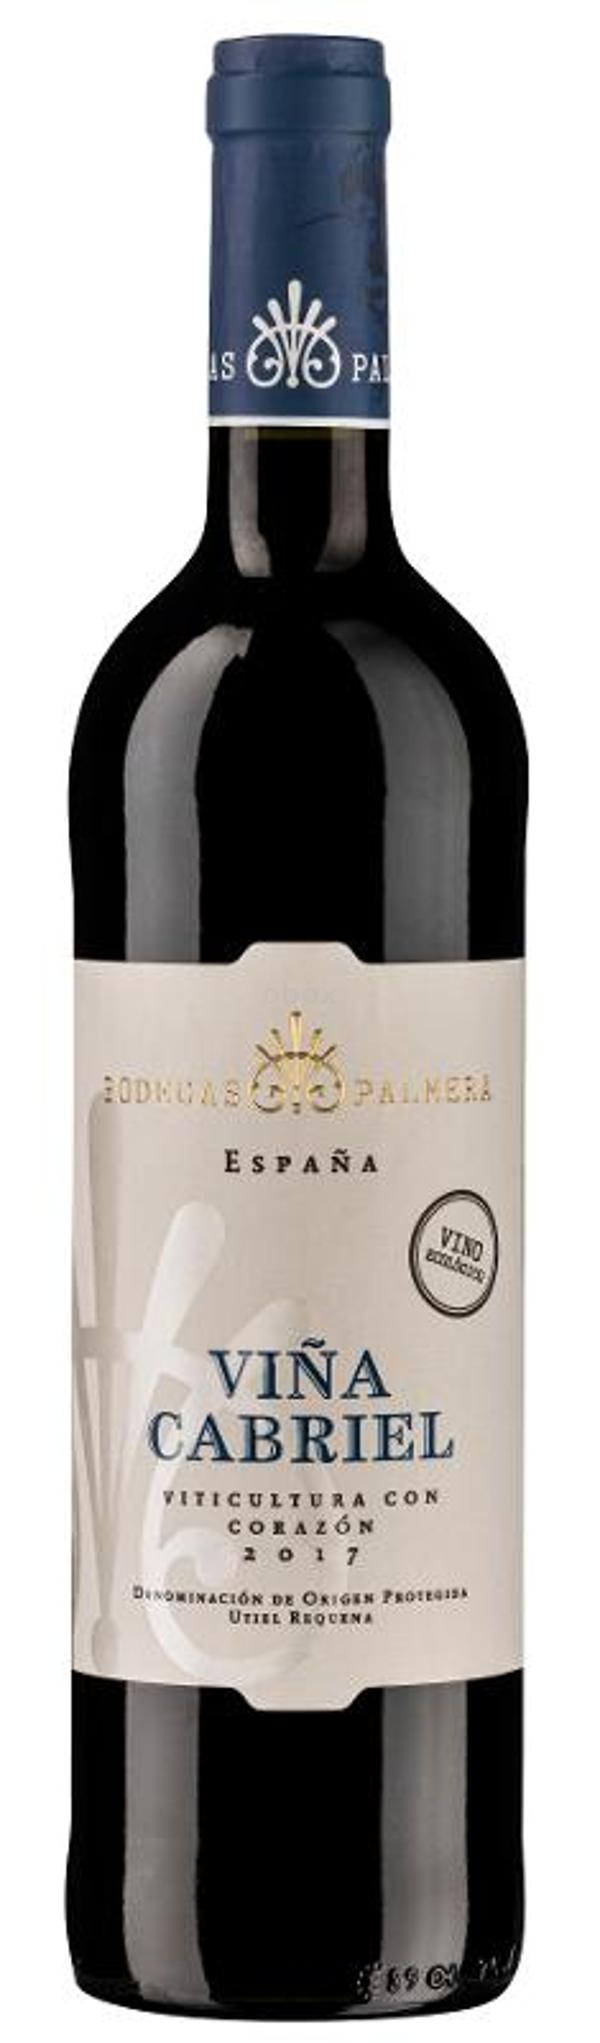 Produktfoto zu Rotwein Viña Cabriel